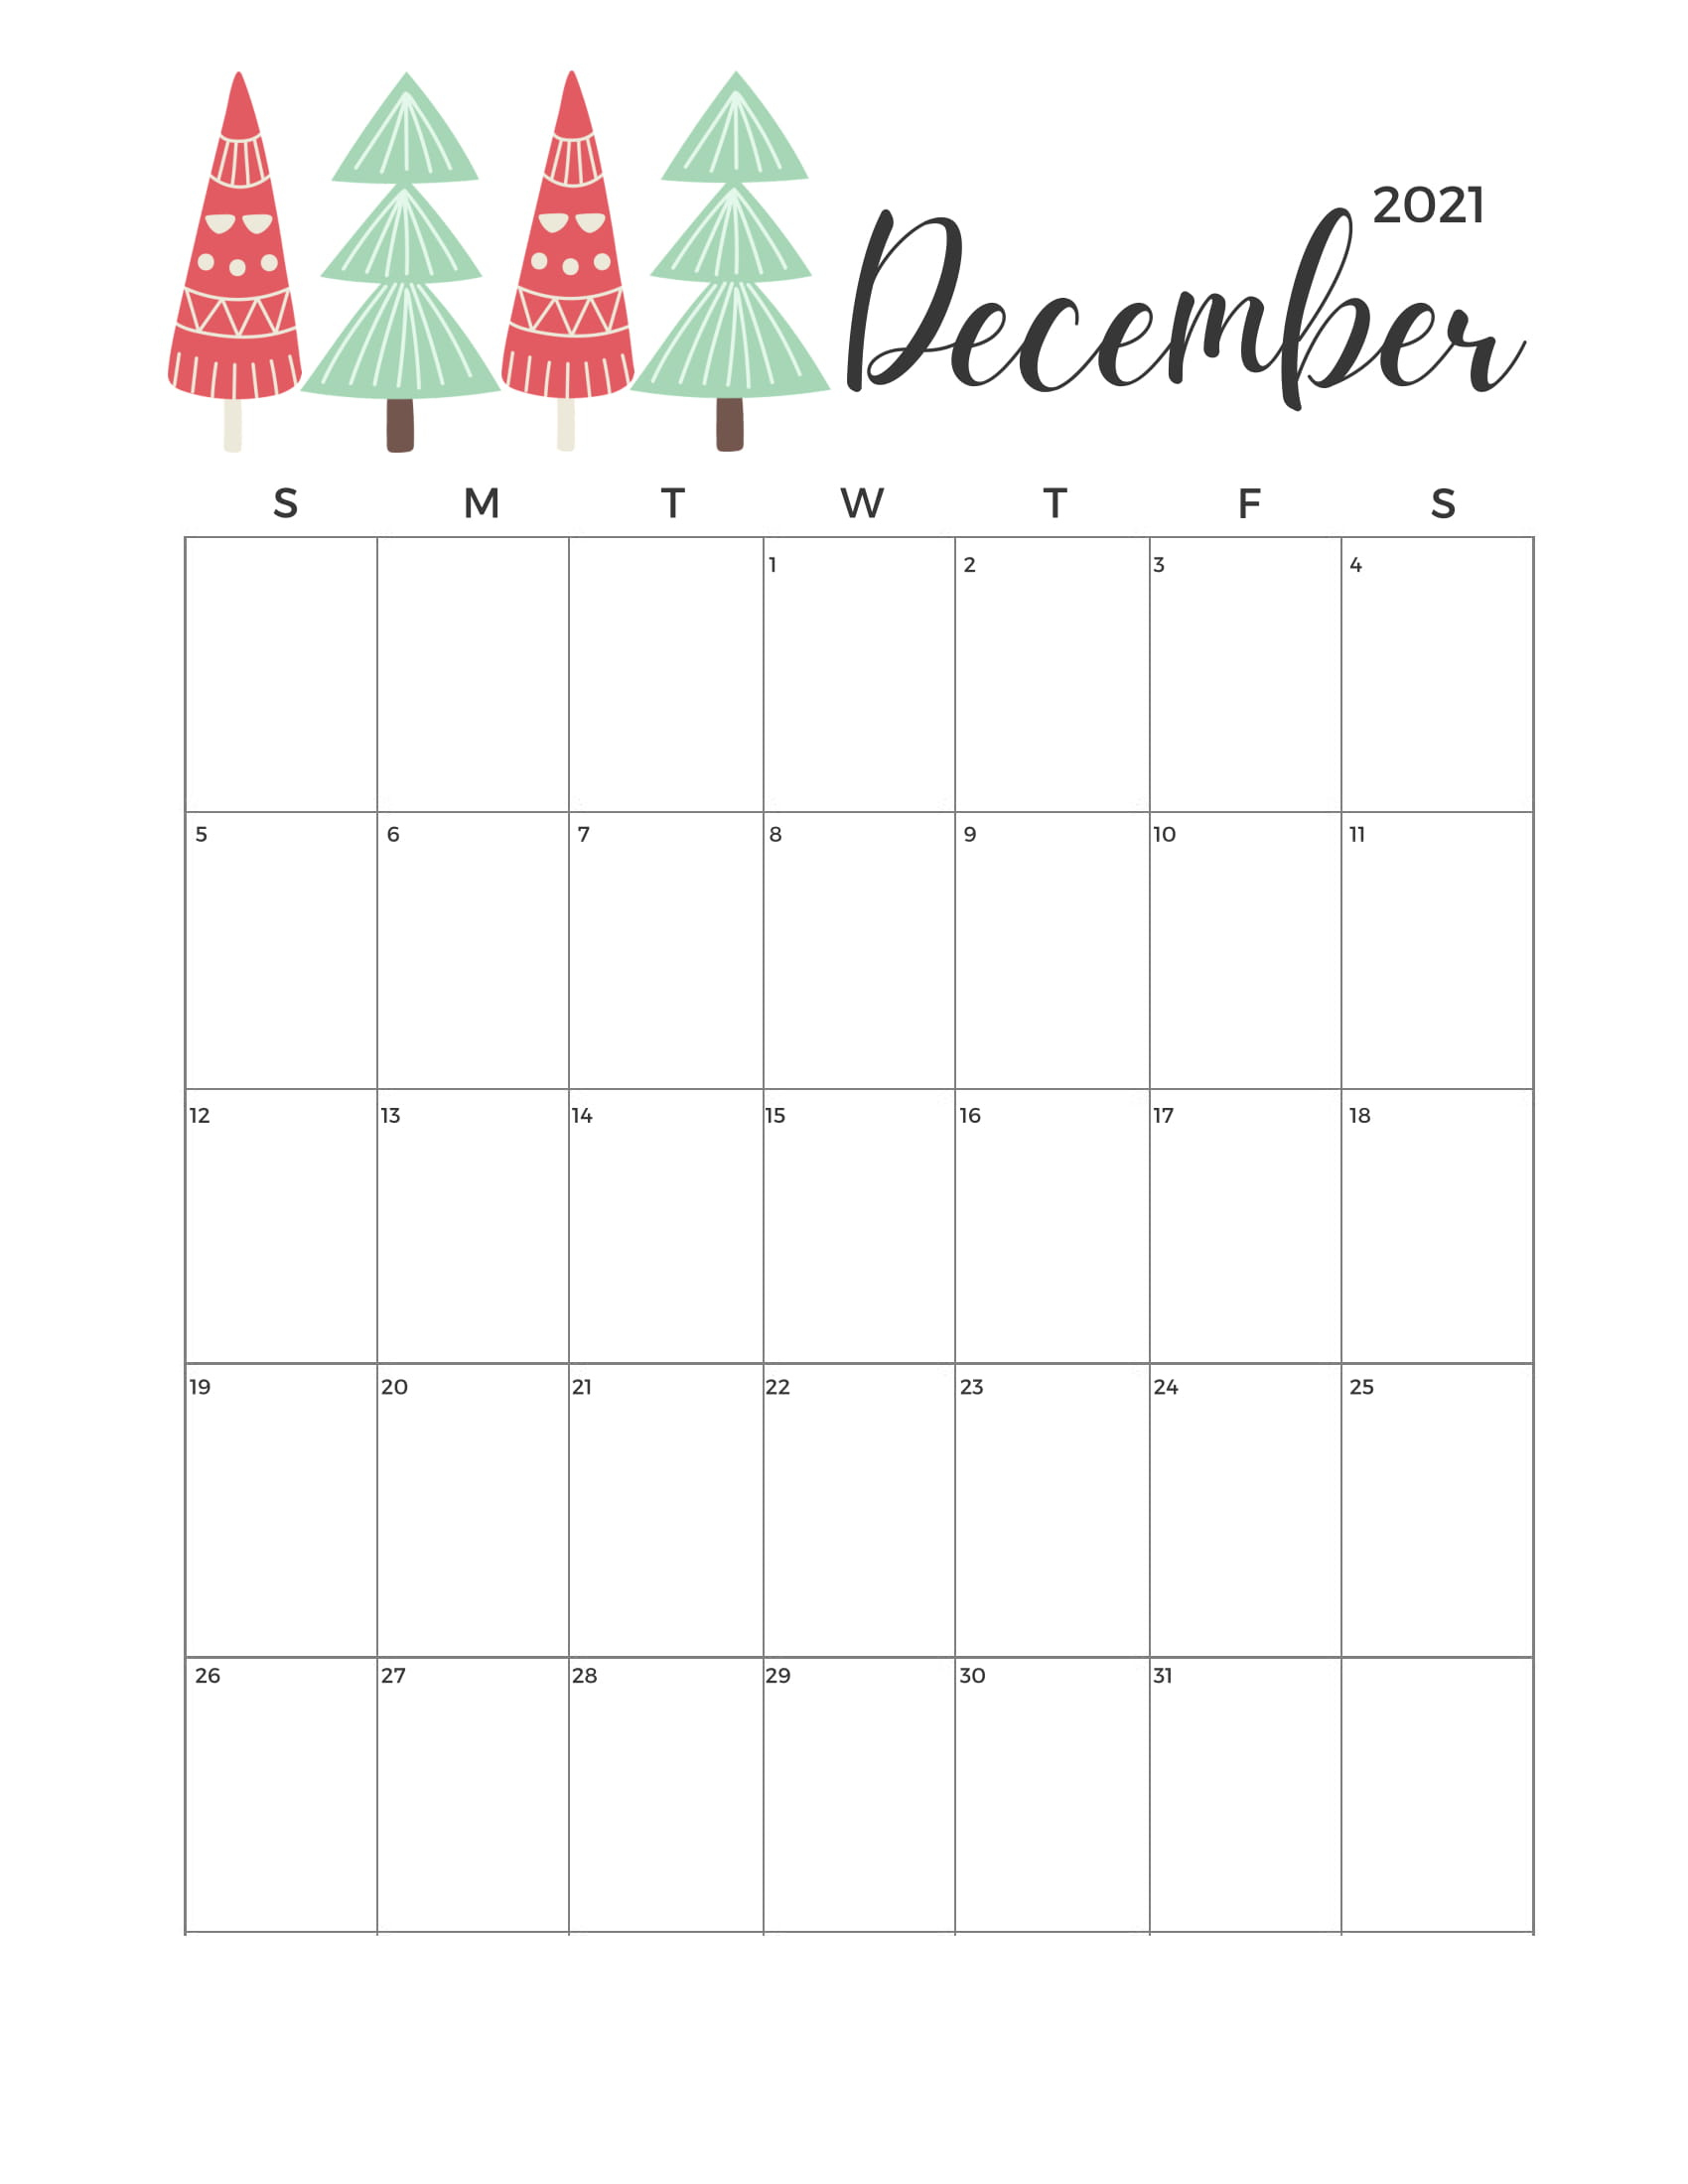 Floral December 2021 Calendar Templates - Printable 2021 Calendars Floral December 2021 Calendar December 2021 Calendar Image